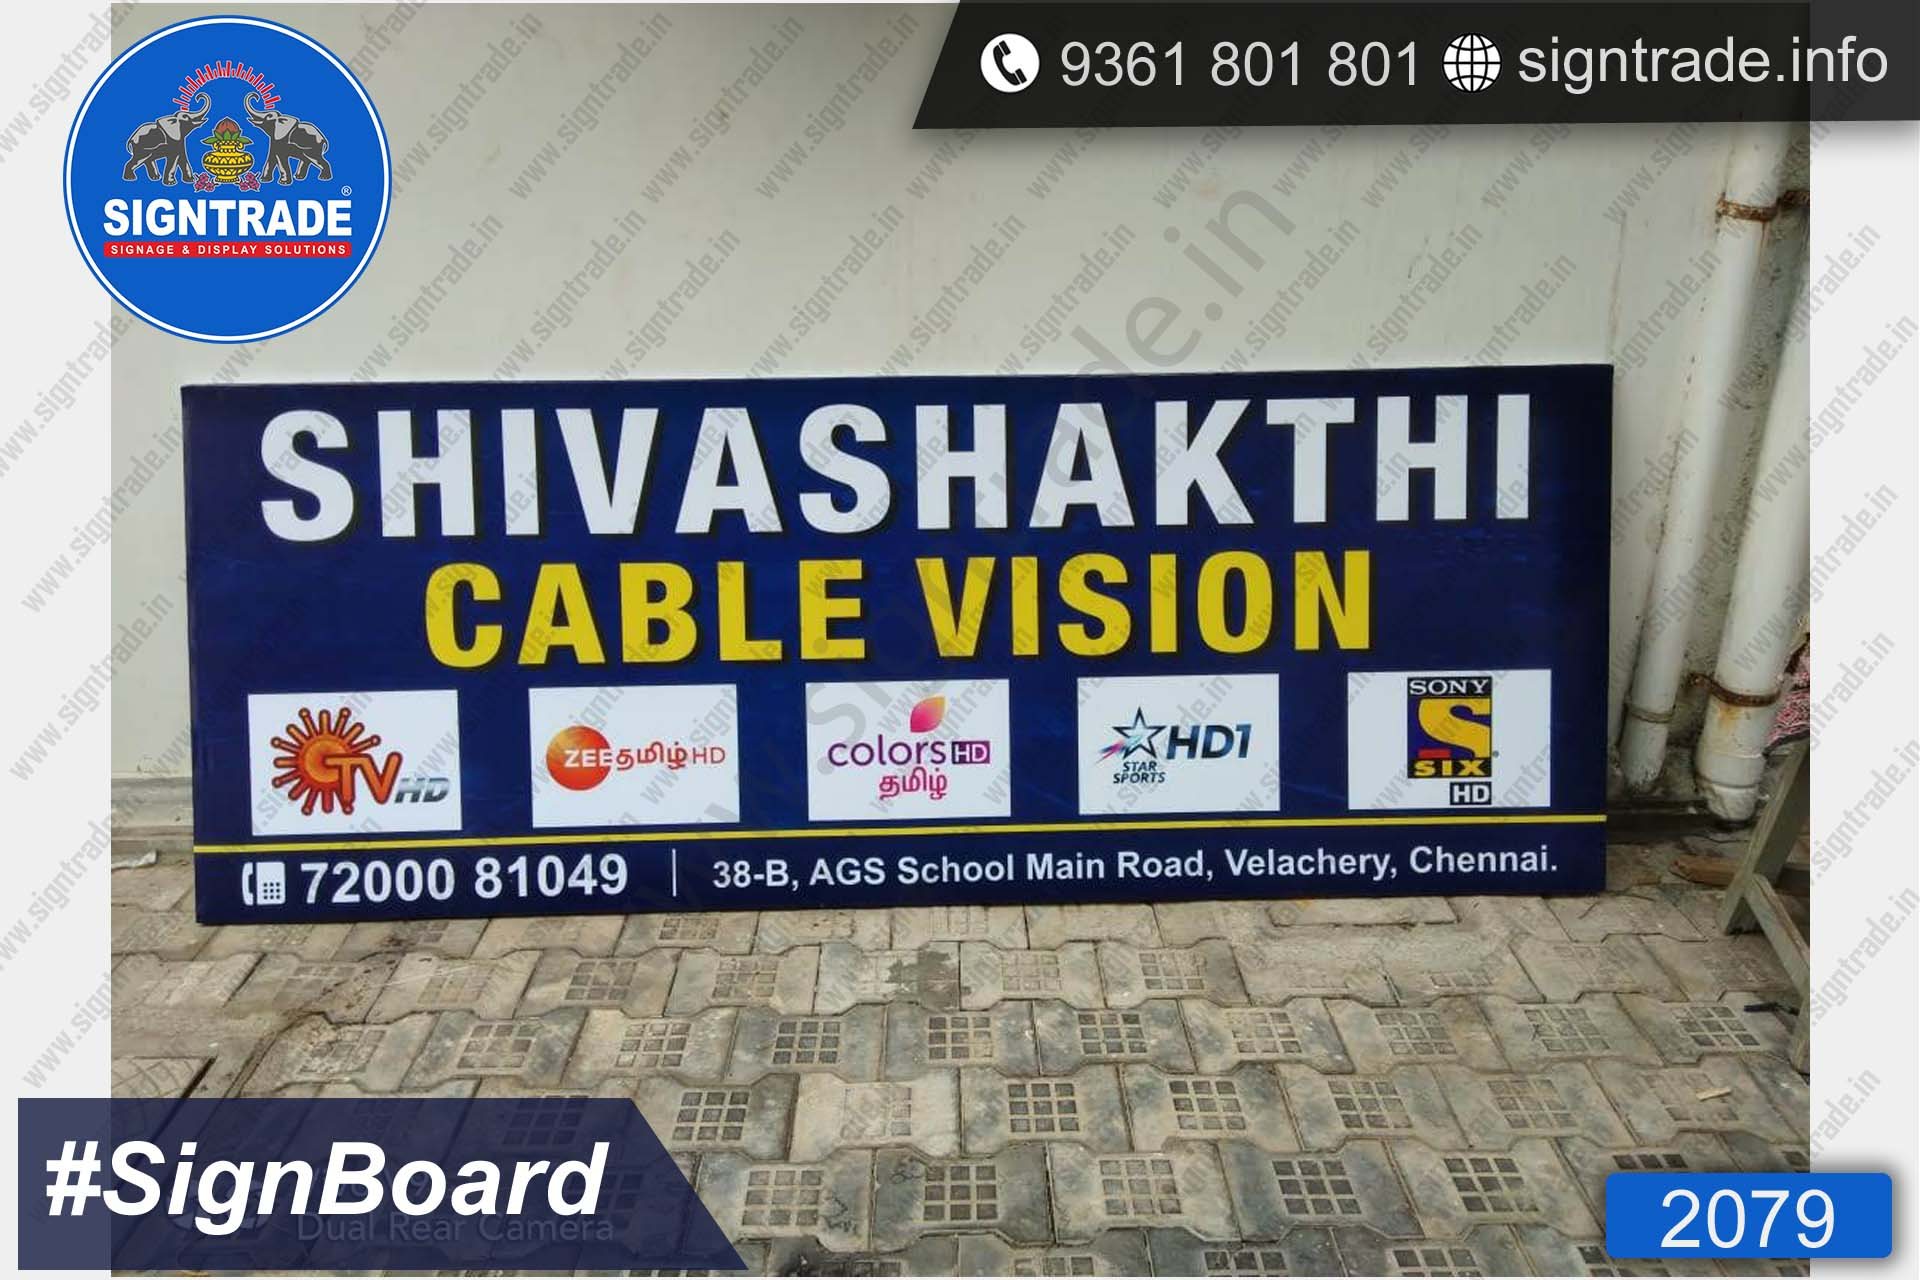 Shivashakthi Cable Vision